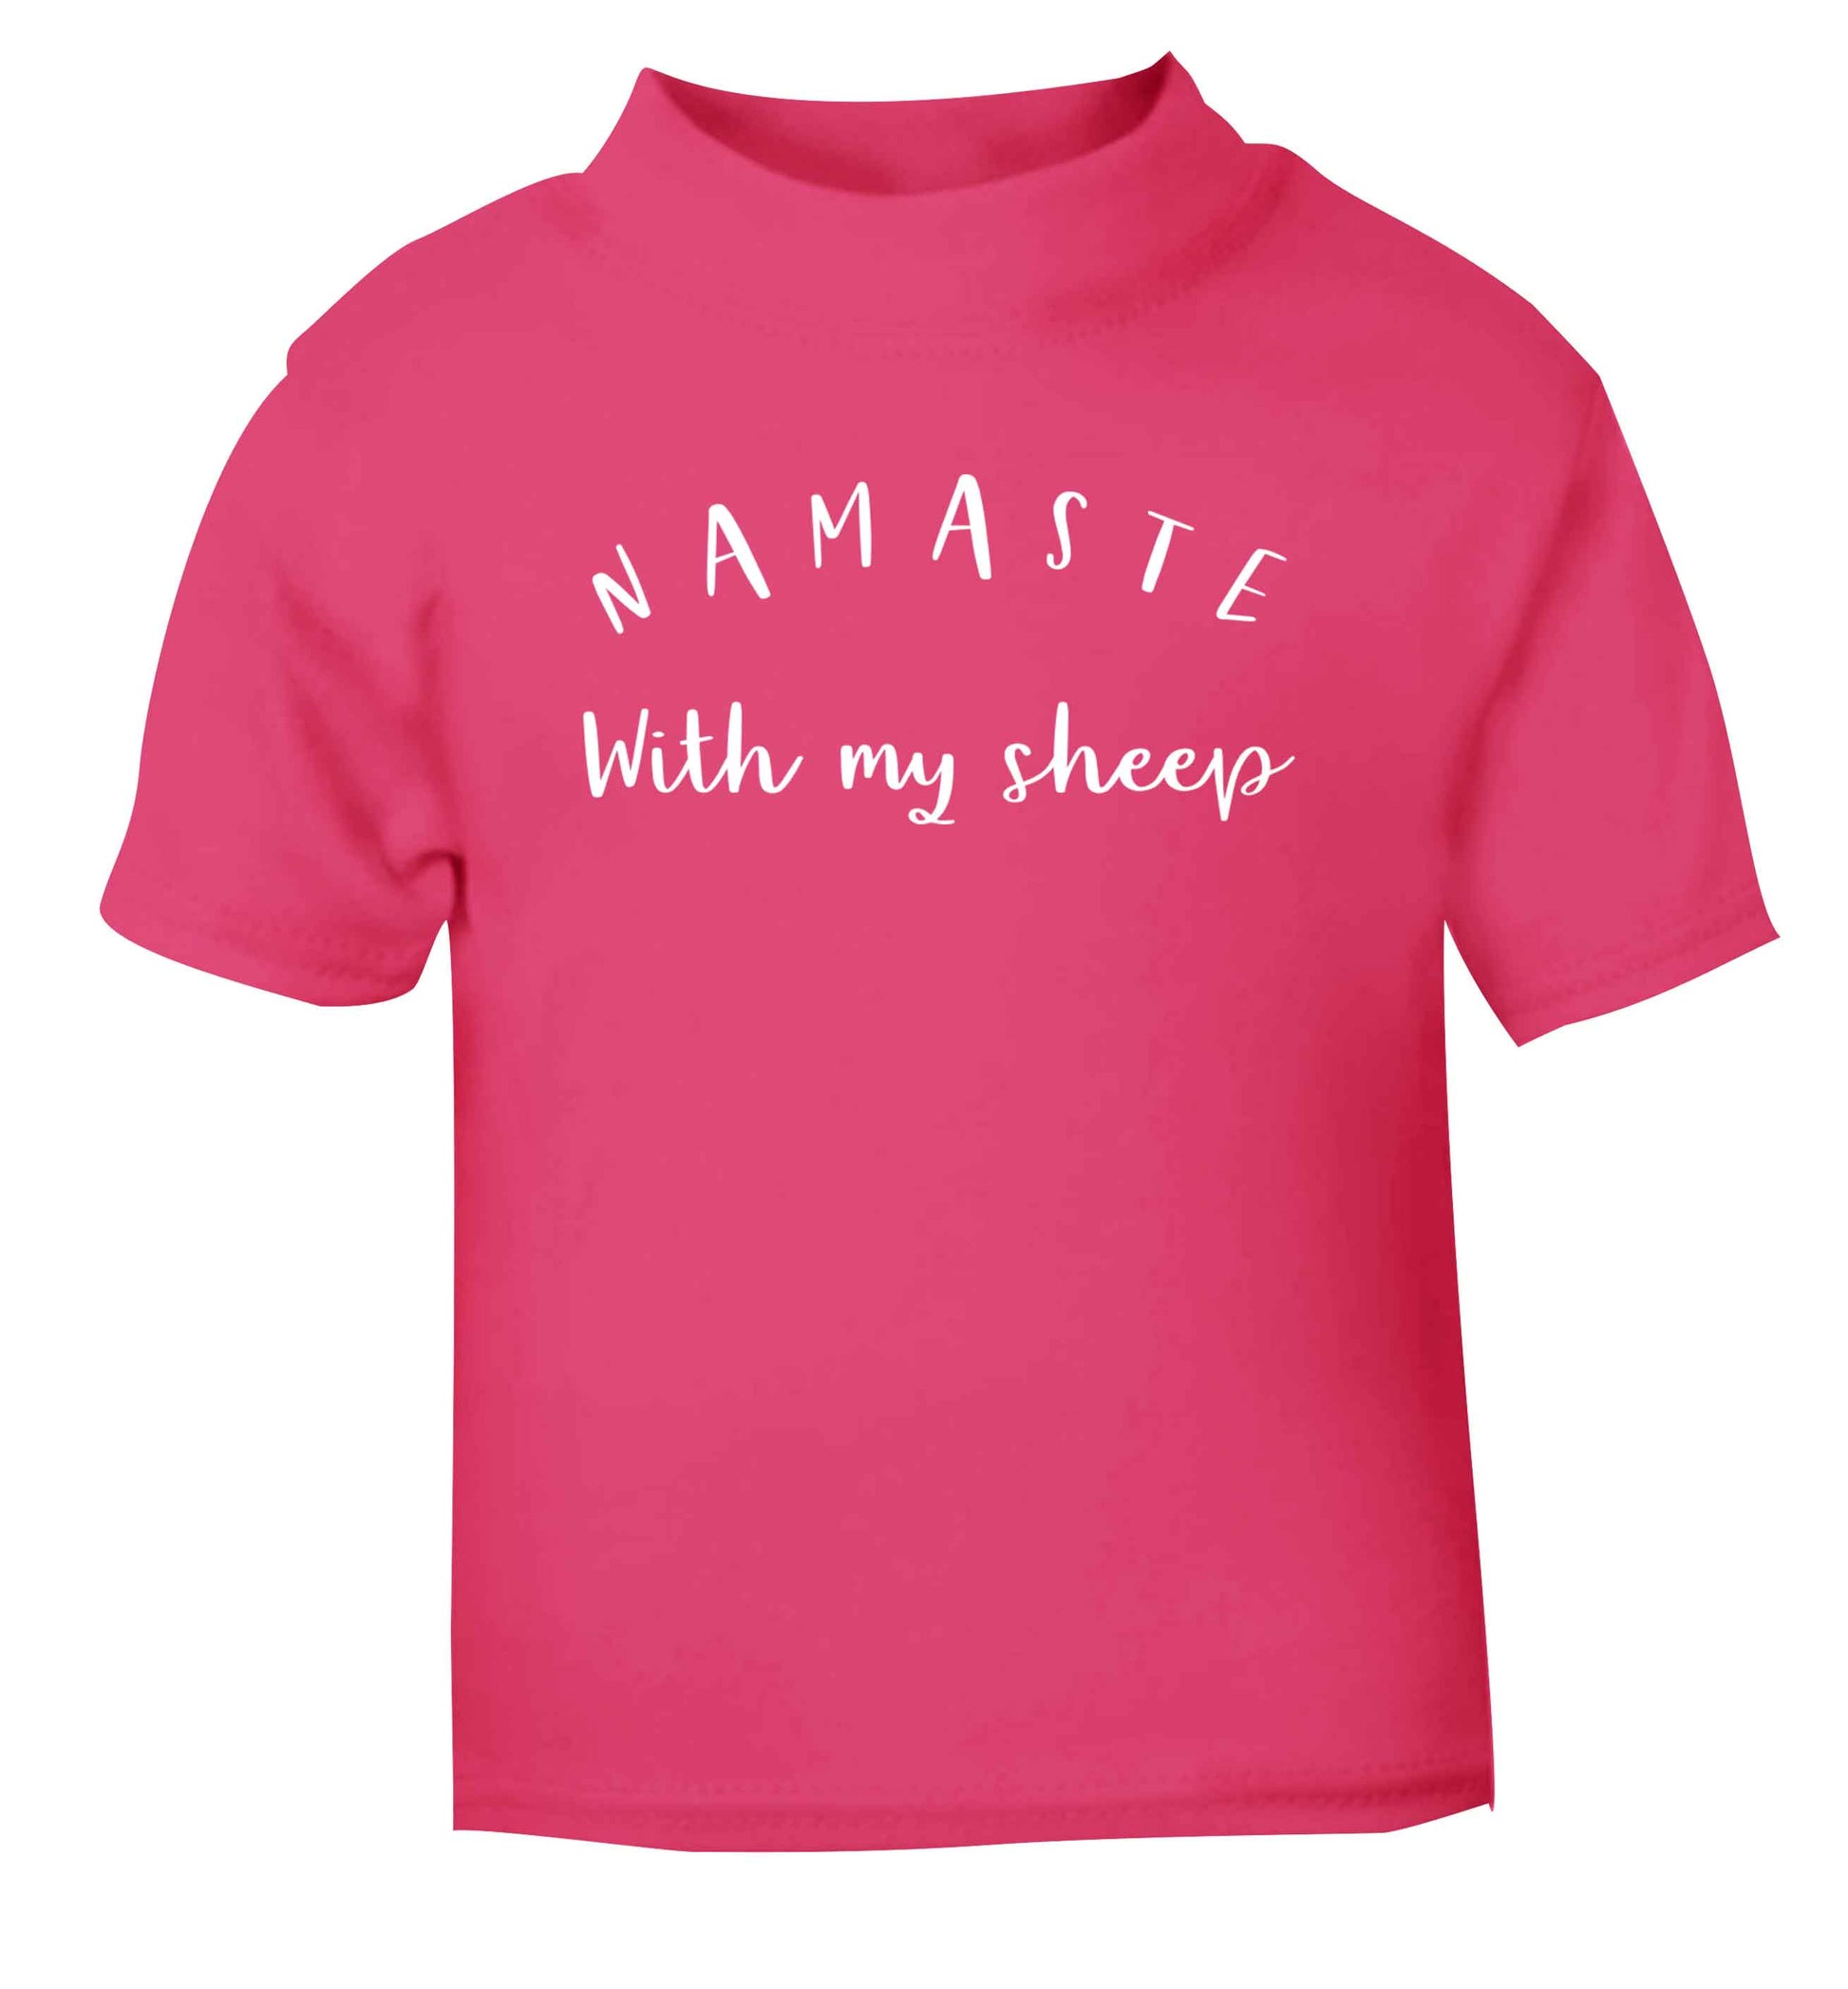 Namaste with my sheep pink Baby Toddler Tshirt 2 Years